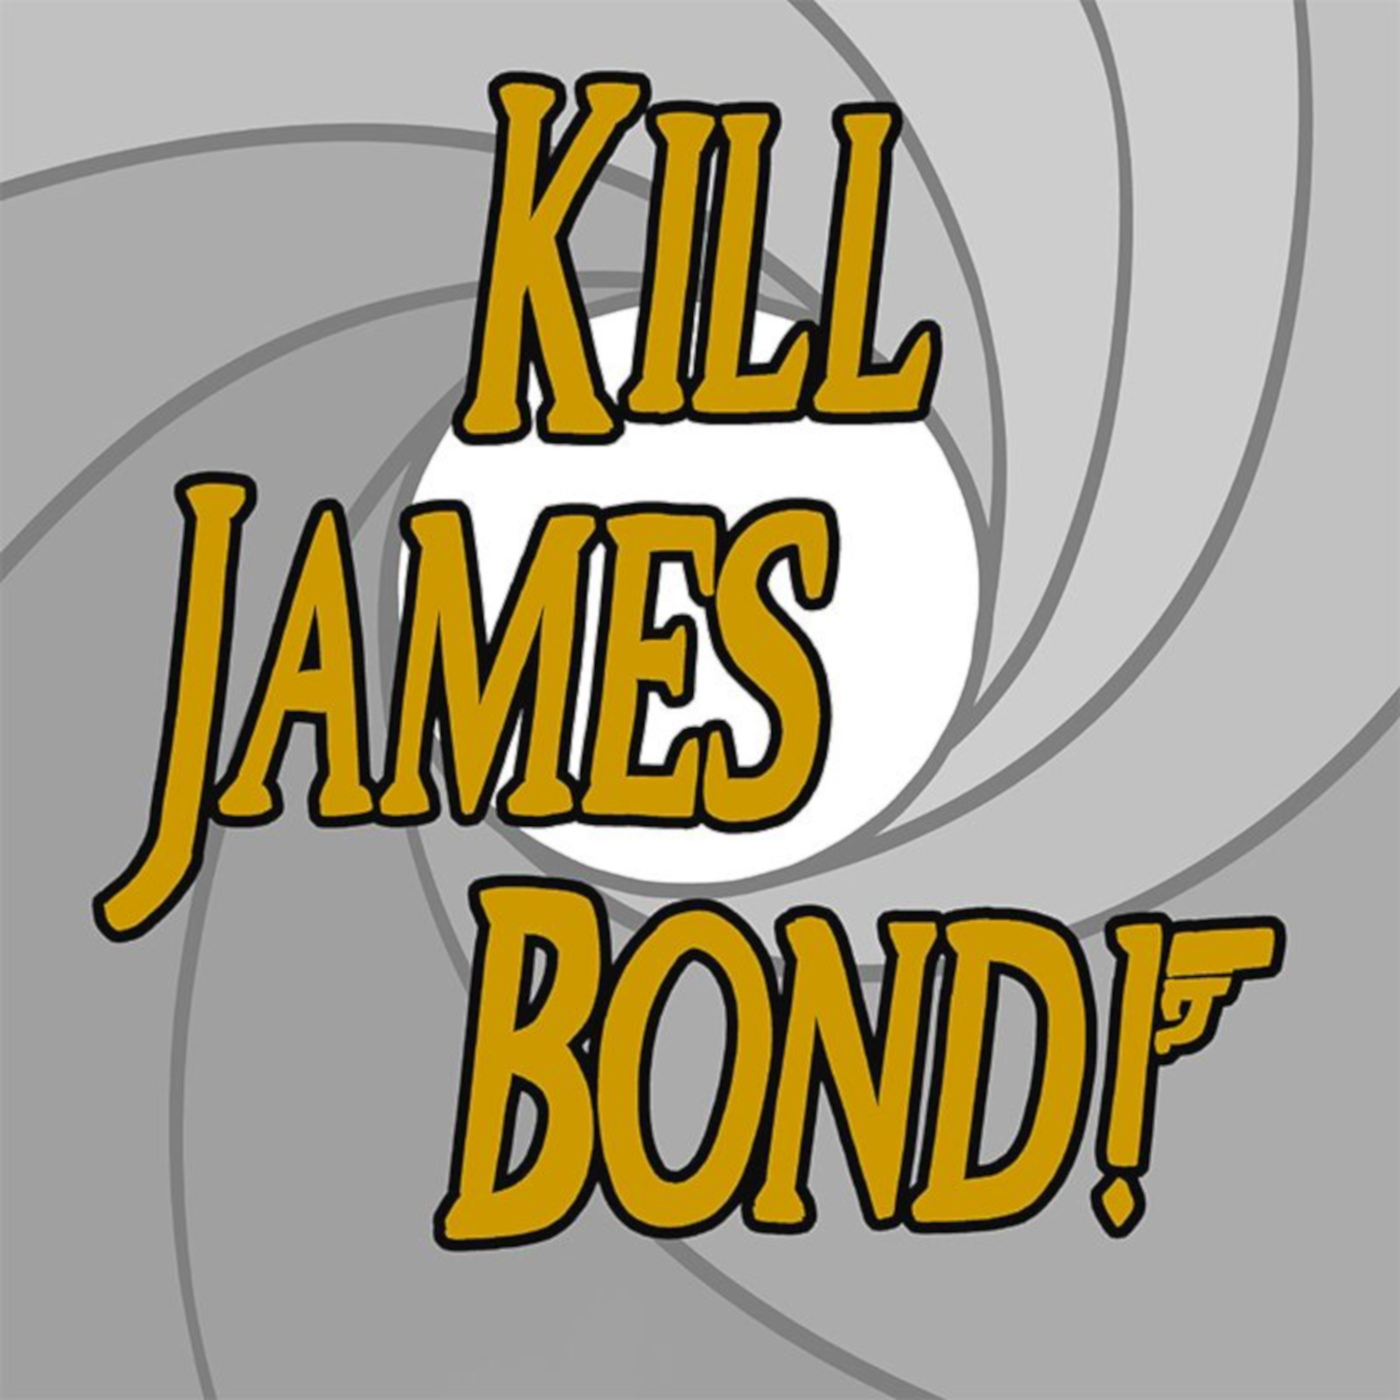 Kill James Bond!